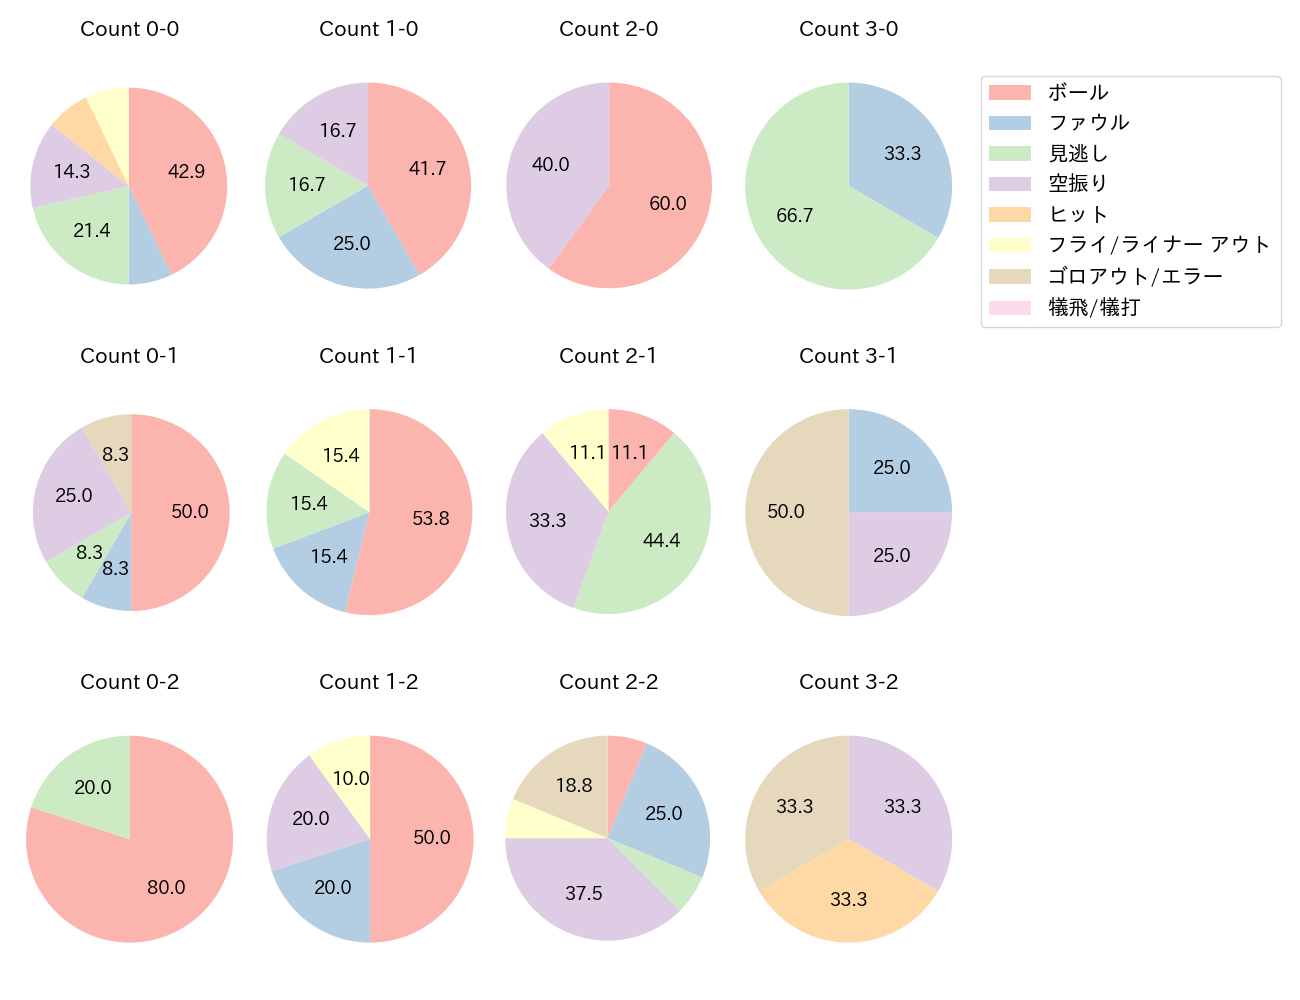 T-岡田の球数分布(2022年9月)